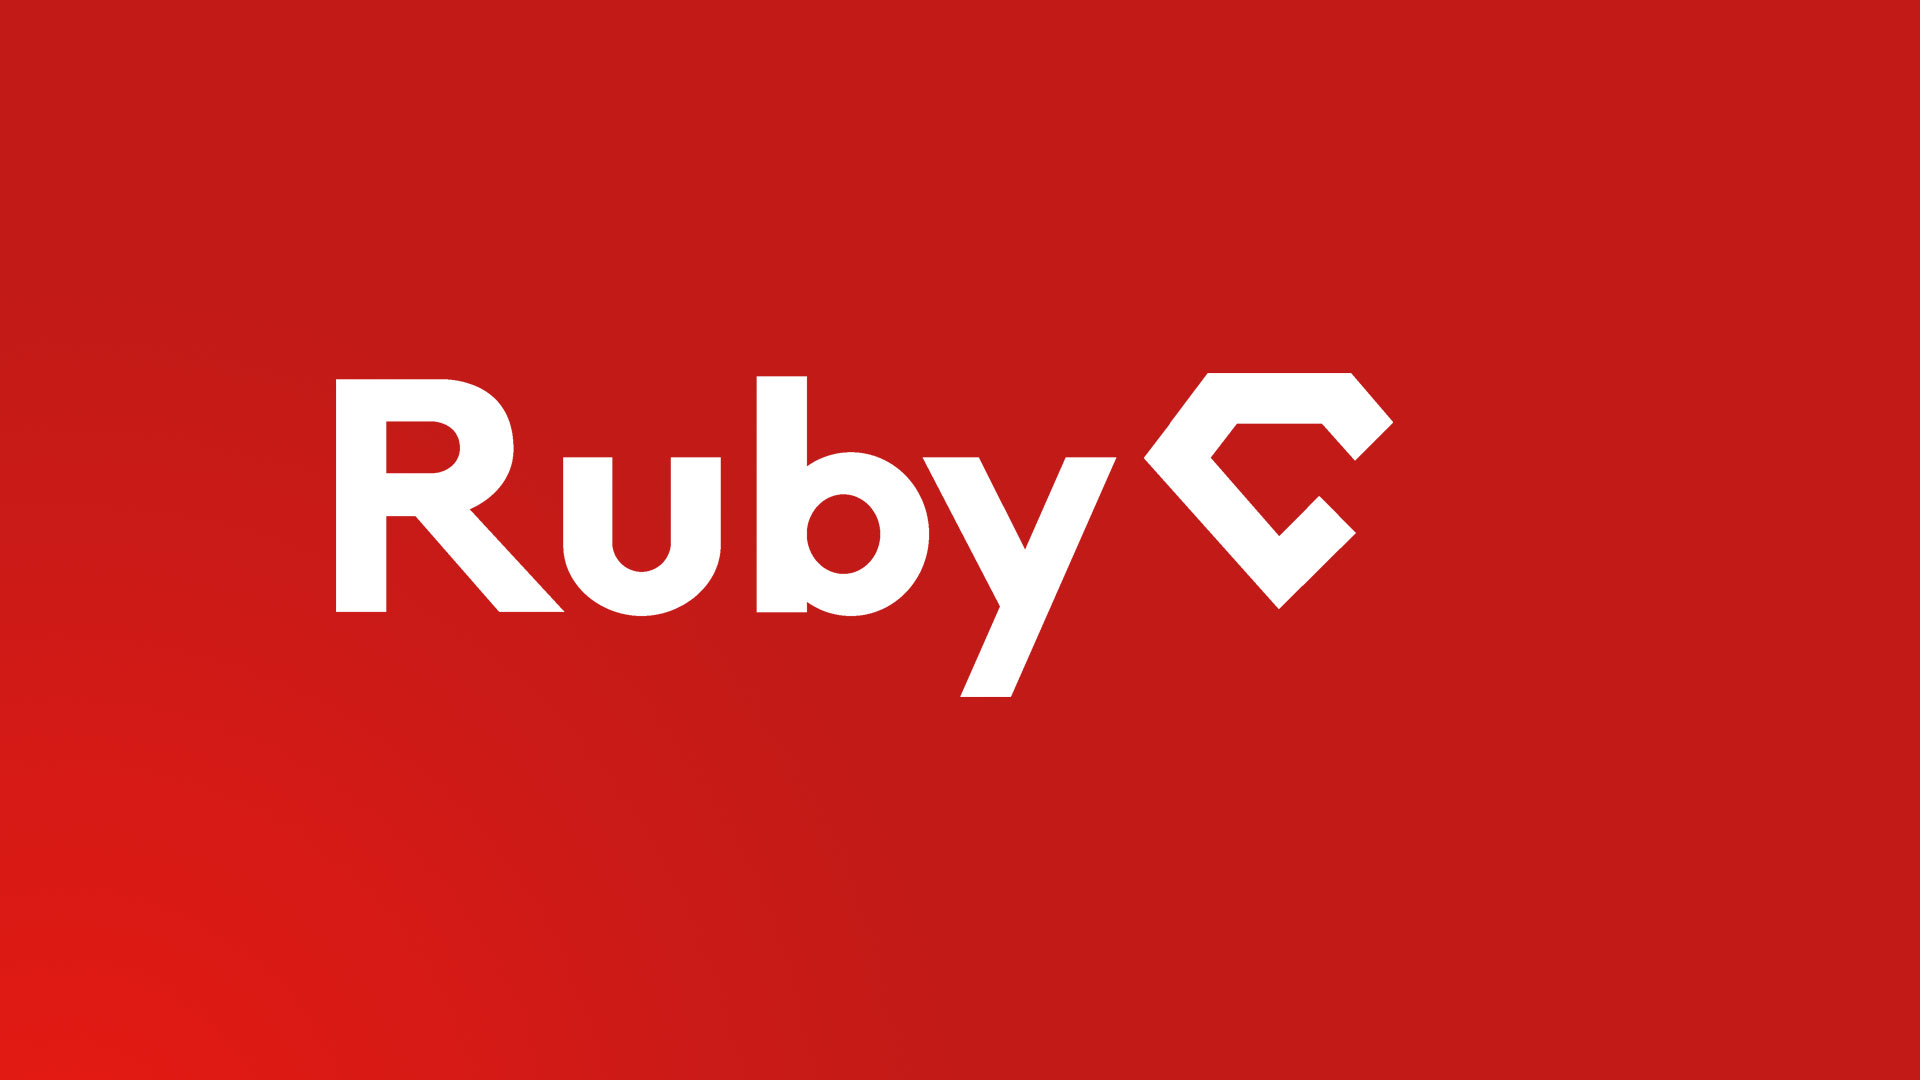 Руби маи. Ruby логотип. Ruby язык программирования. Ruby программирование. Ruby яп.